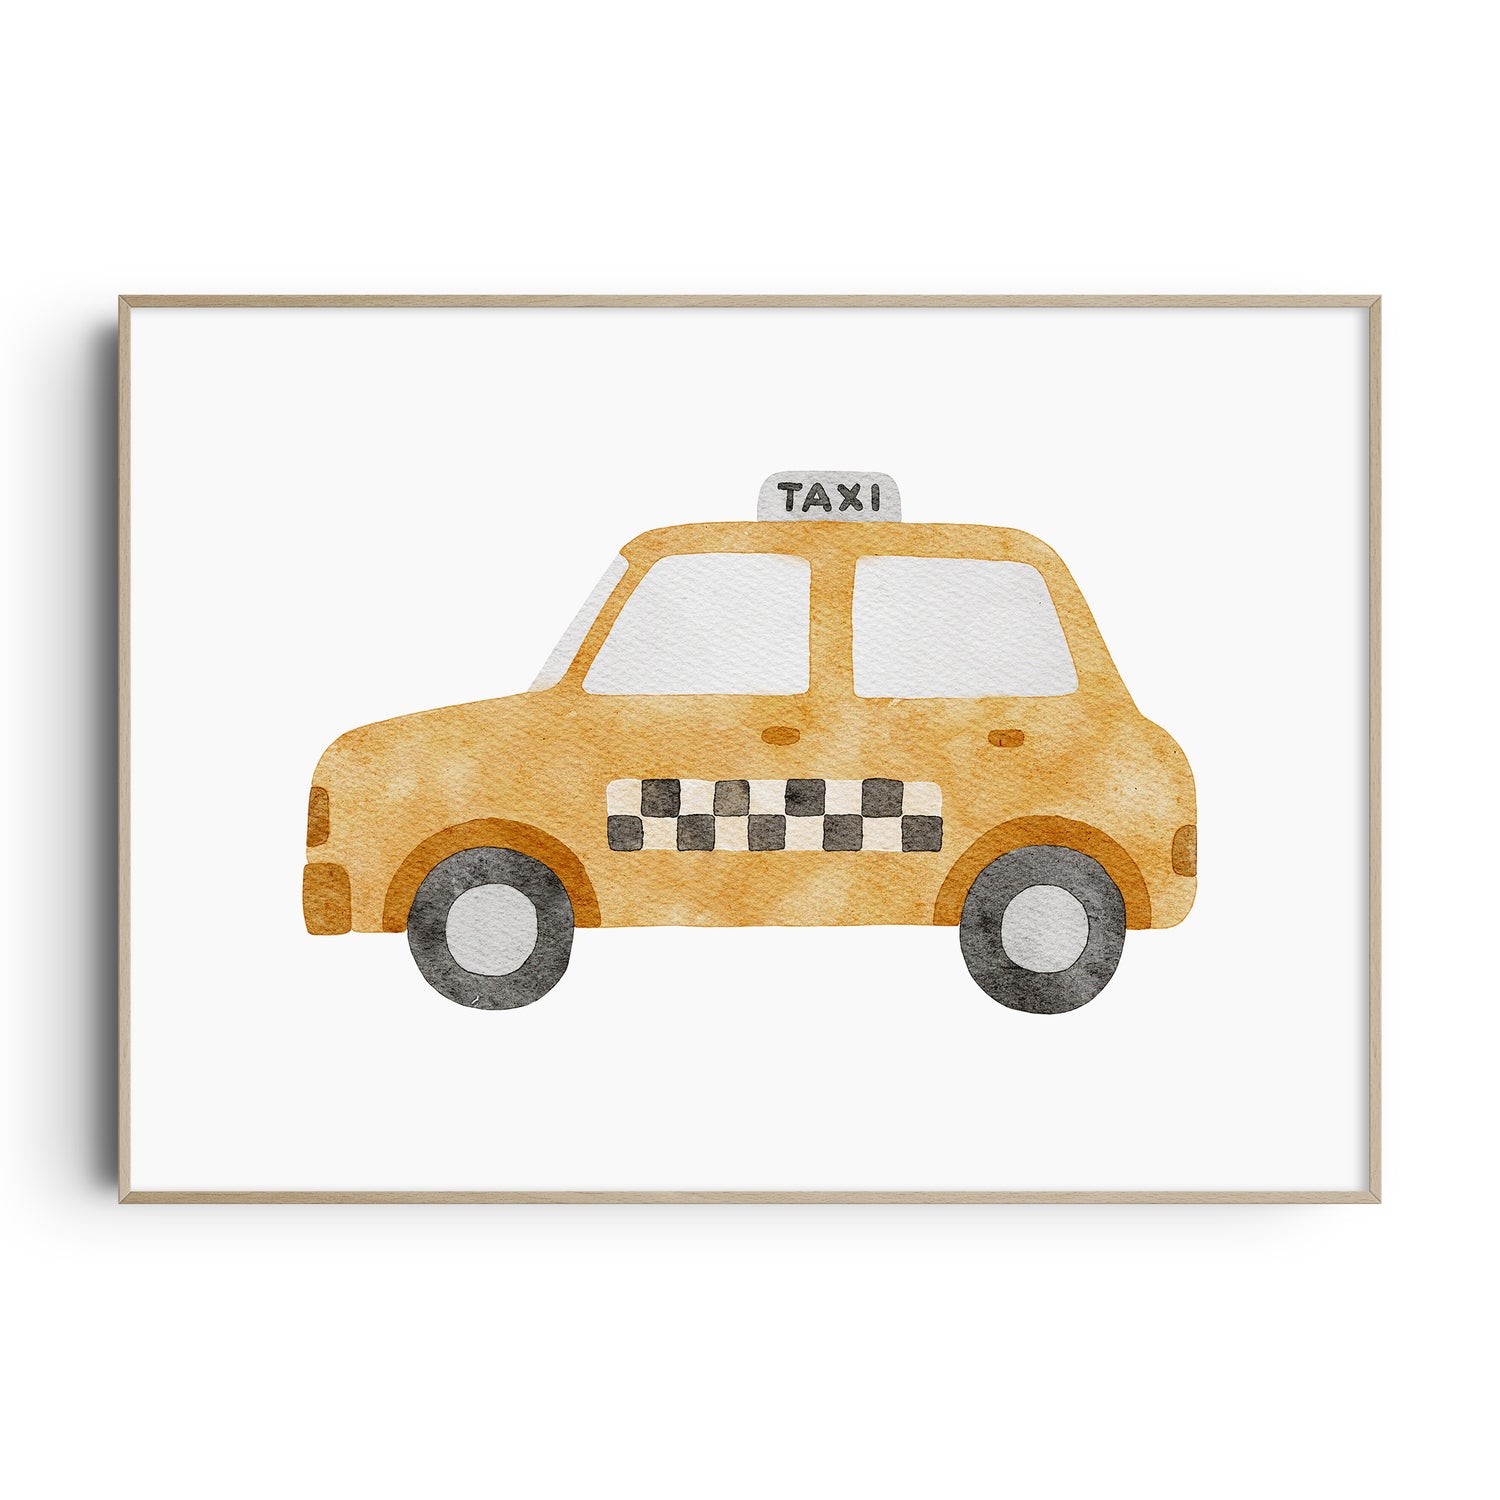 Taxi Print